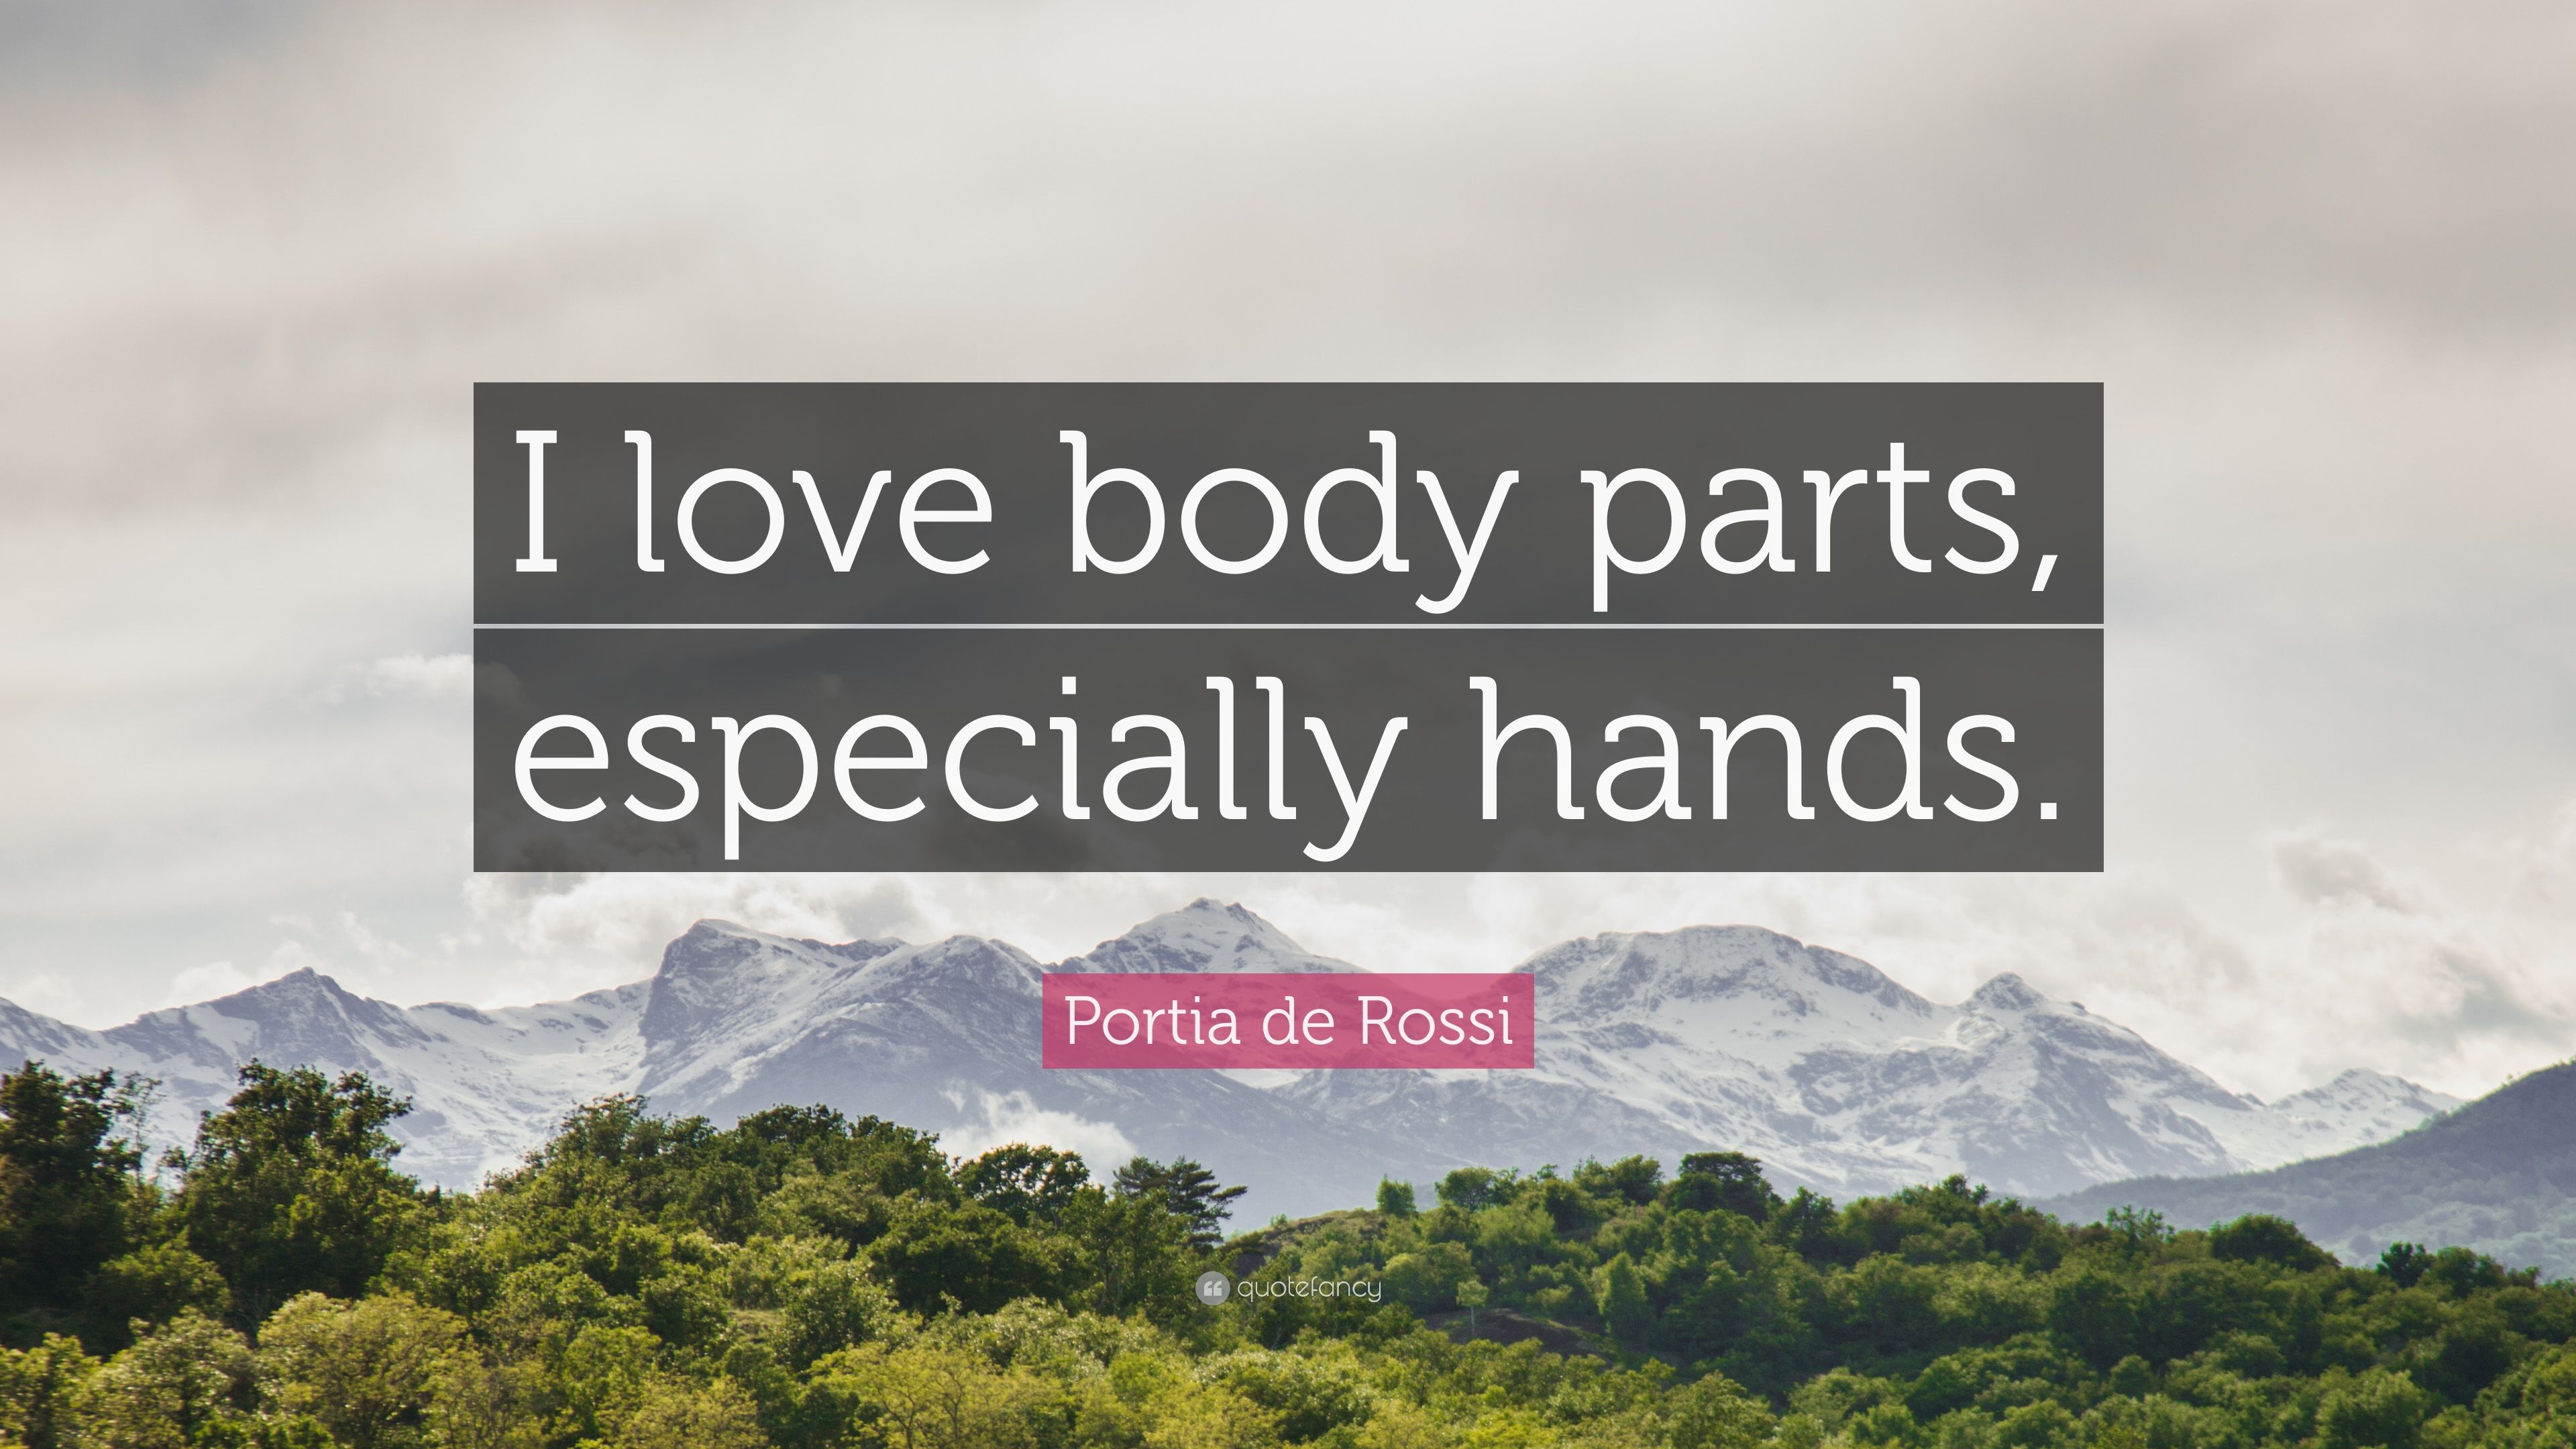 Portia de Rossi Quote: “I love body parts, especially hands.” (7 wallpaper)